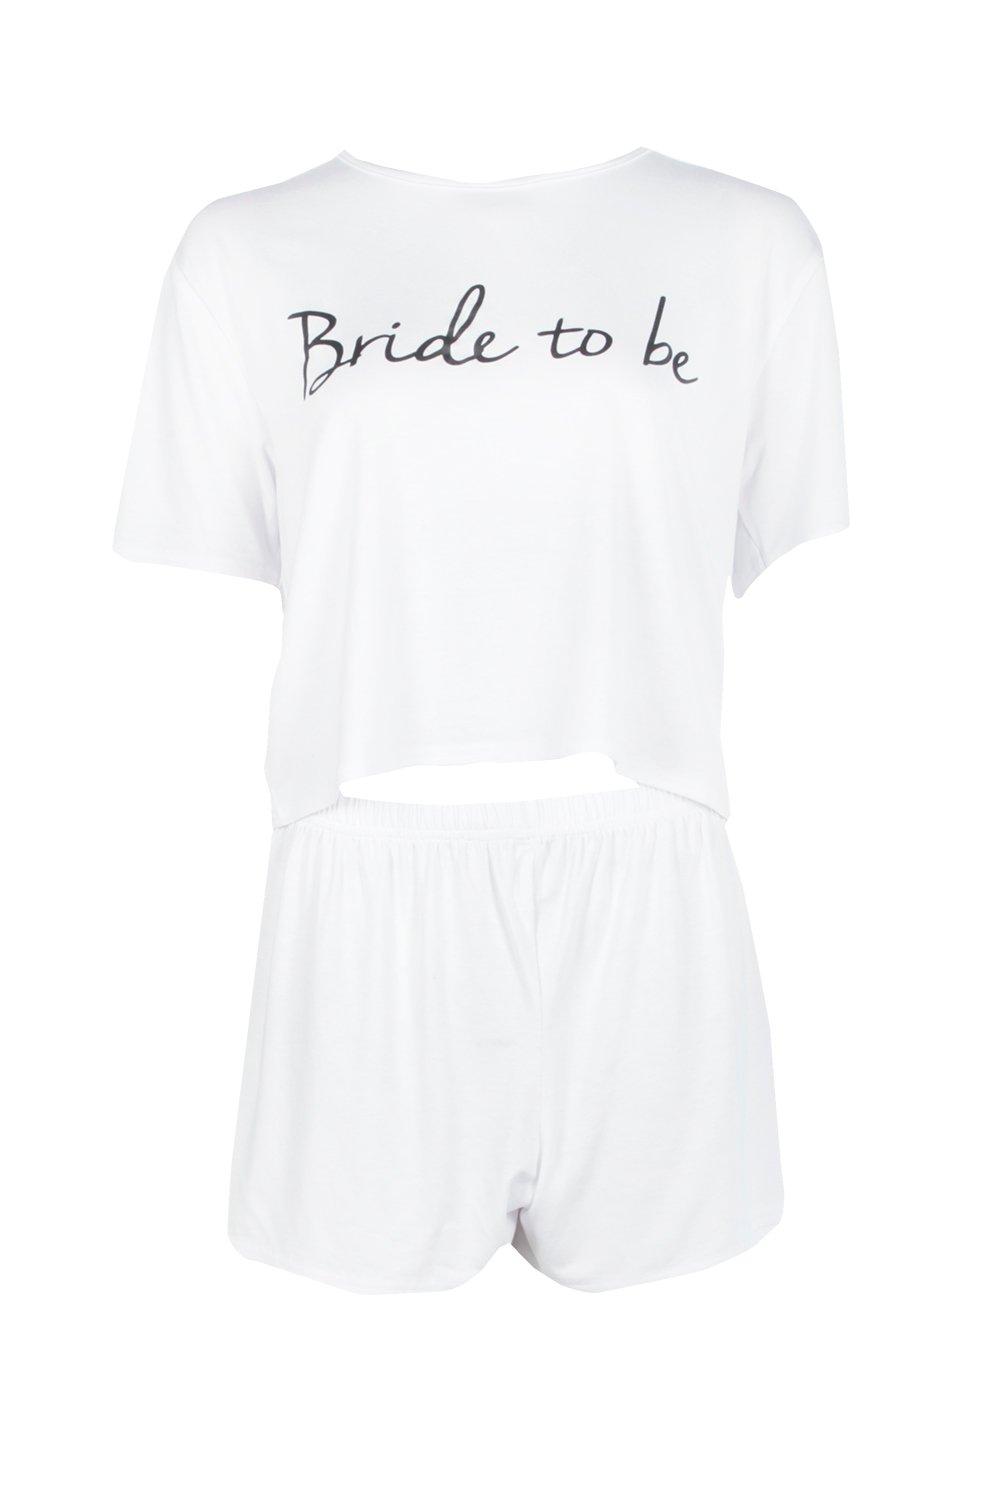 I am white. Bride to be майка. Пижама Olivera Bride to be. Кореянки в пижаме шорты и футболка.